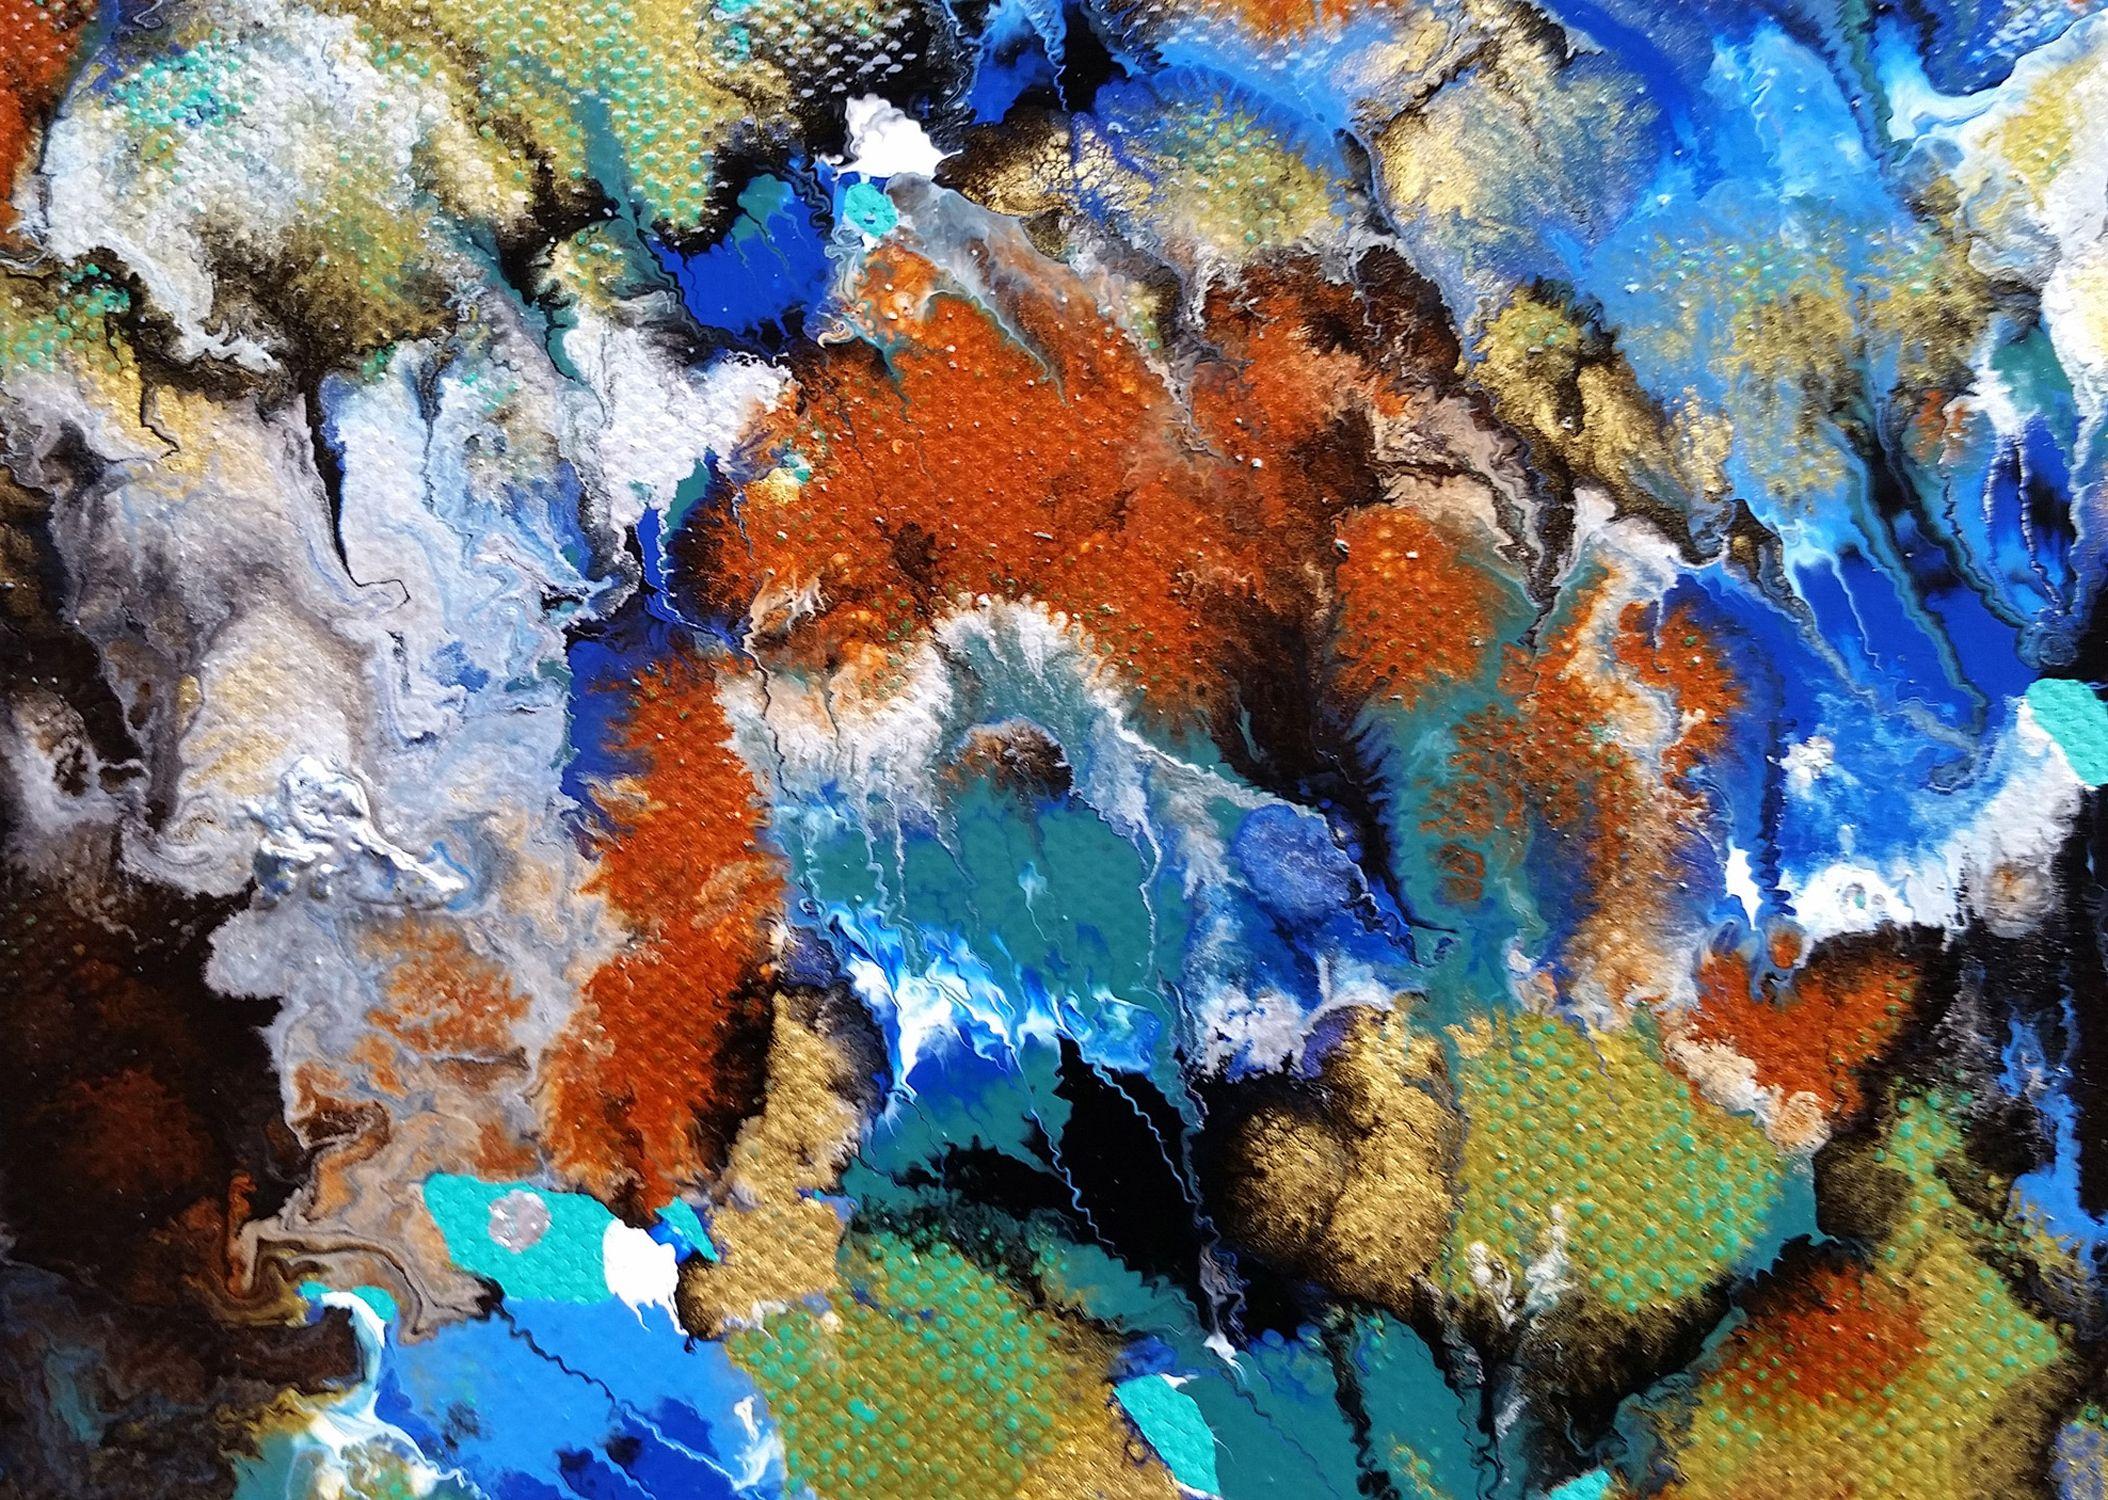 Fluid Ocean, Mixed Media on Canvas - Abstract Expressionist Mixed Media Art by Alexandra Romano